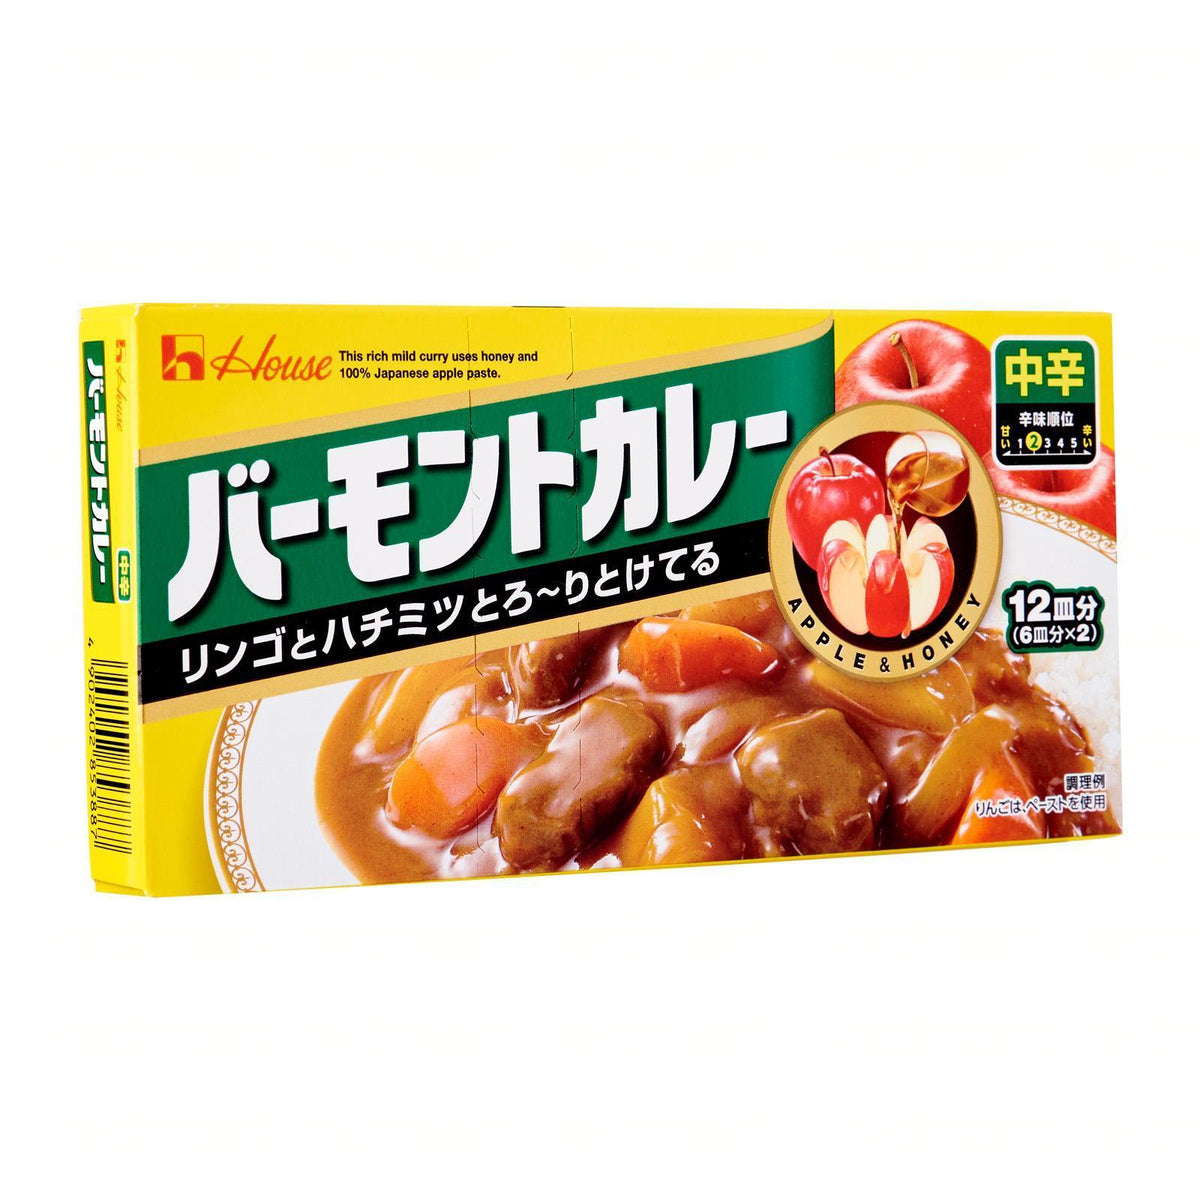  S&B Golden Curry Sauce Mix, Medium Hot, 7.8-Ounce : Curry Roux  : Grocery & Gourmet Food